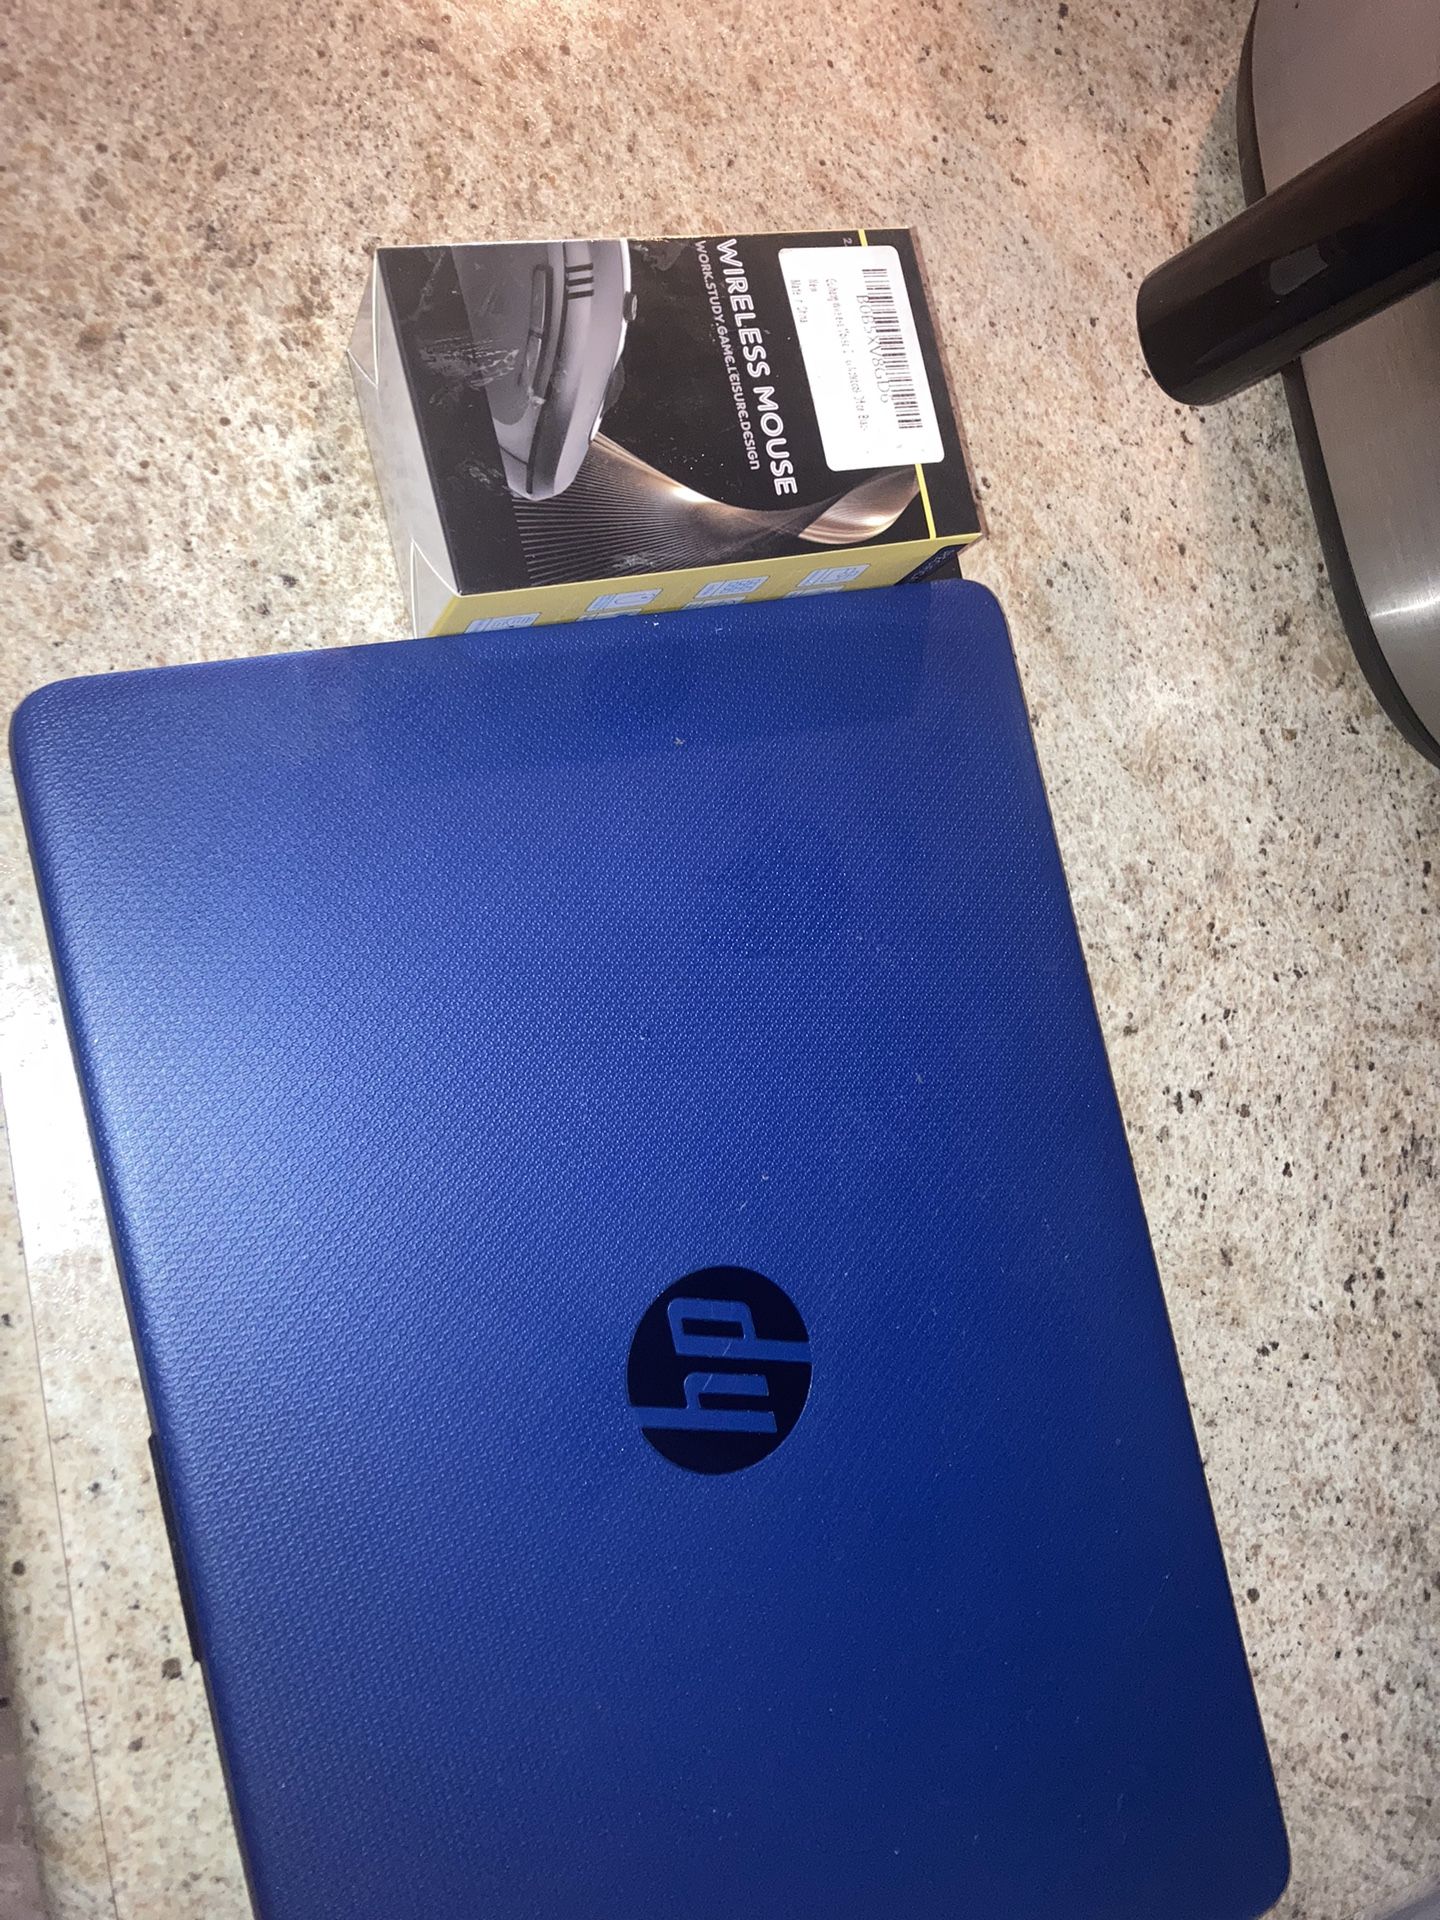 HP 14-inch Laptop 